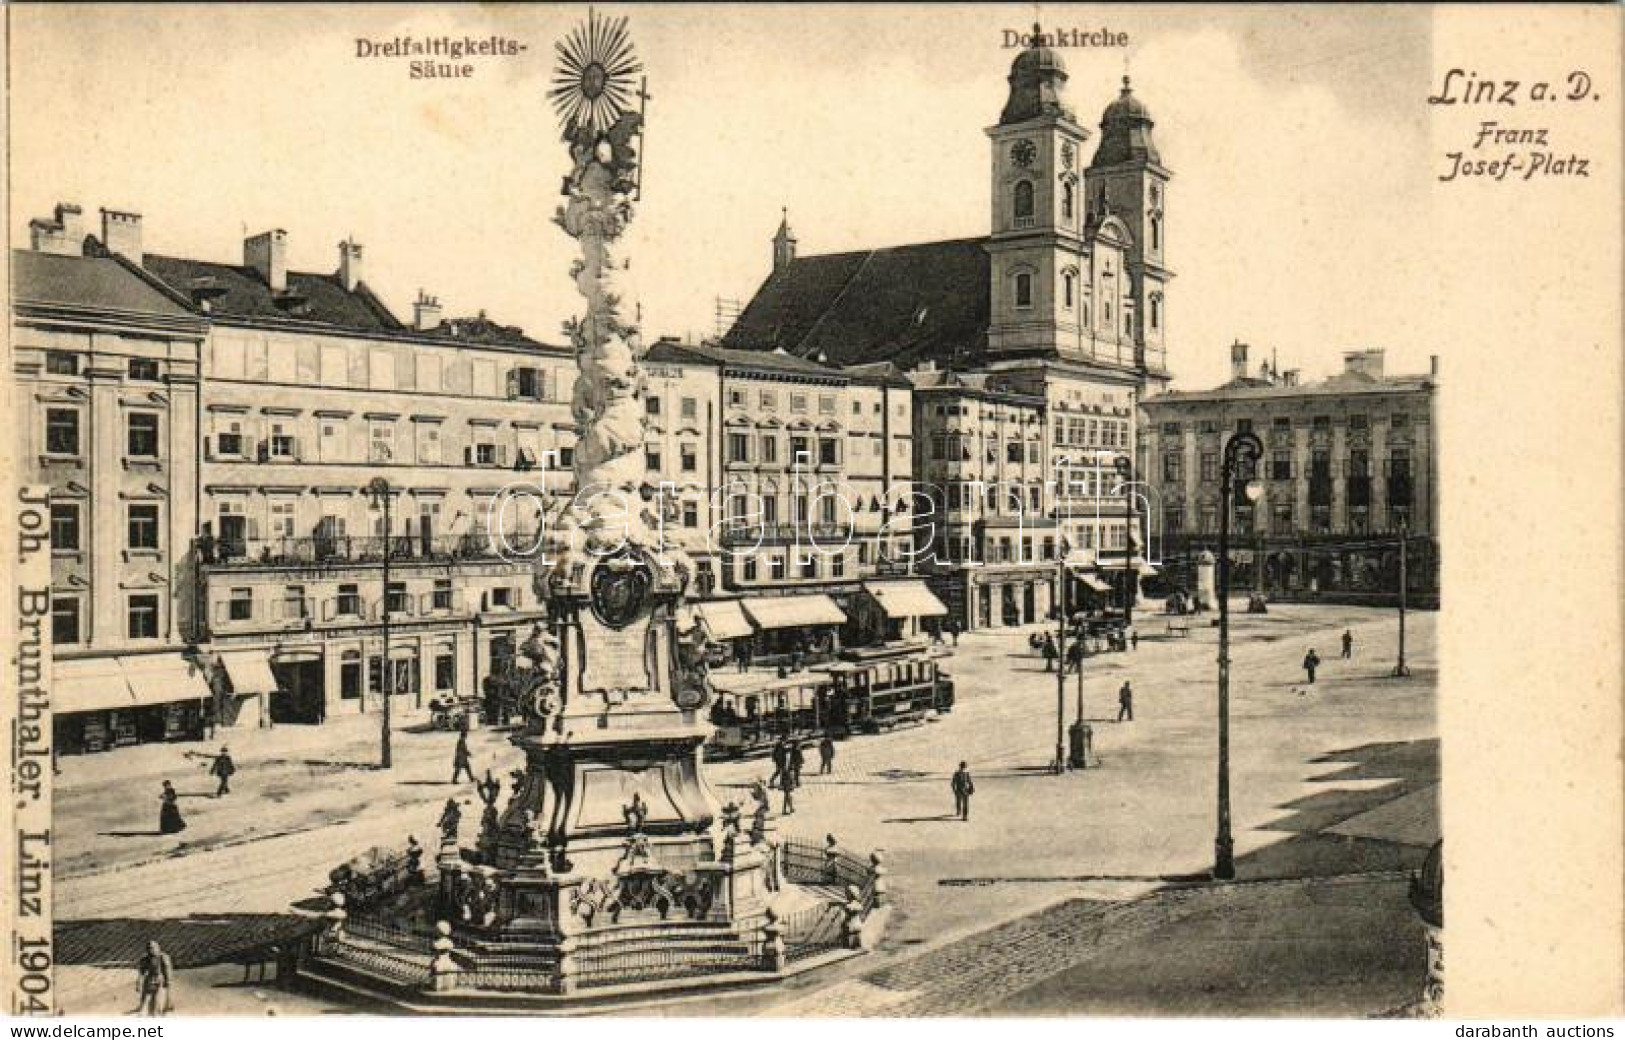 ** T2 Linz, Franz Josef-Platz, Dreifaltigkeits-Säule, Domkirche / Square, Holy Trinity Statue, Church, Tram, Shops / Fer - Non Classés